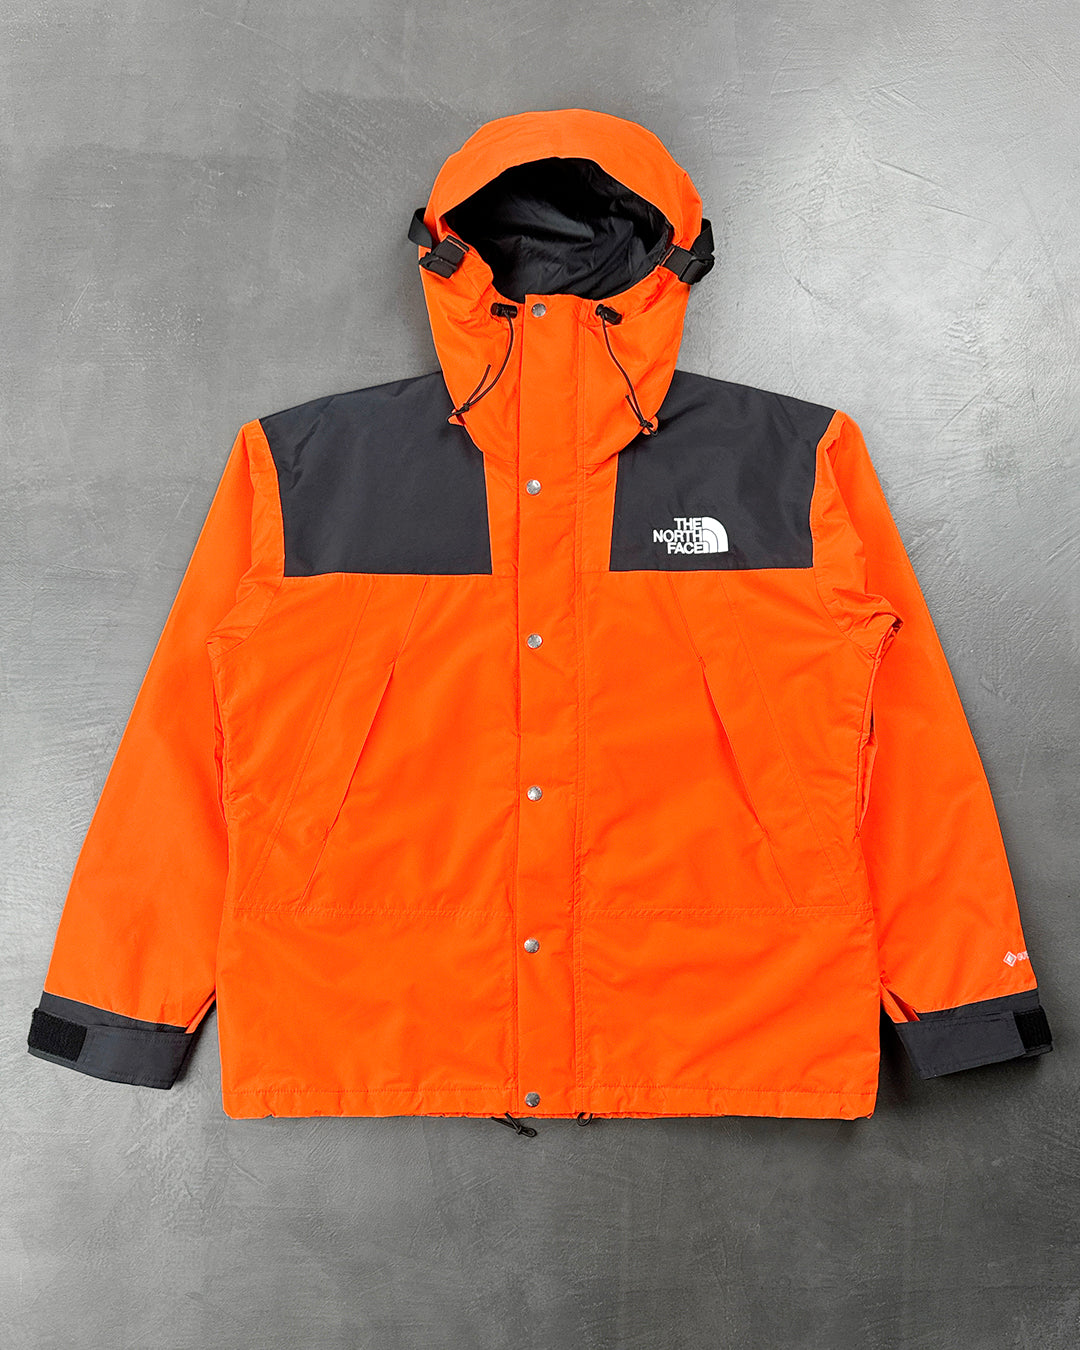 The North Face 1990 GORE-TEX® Mountain Jacket Orange